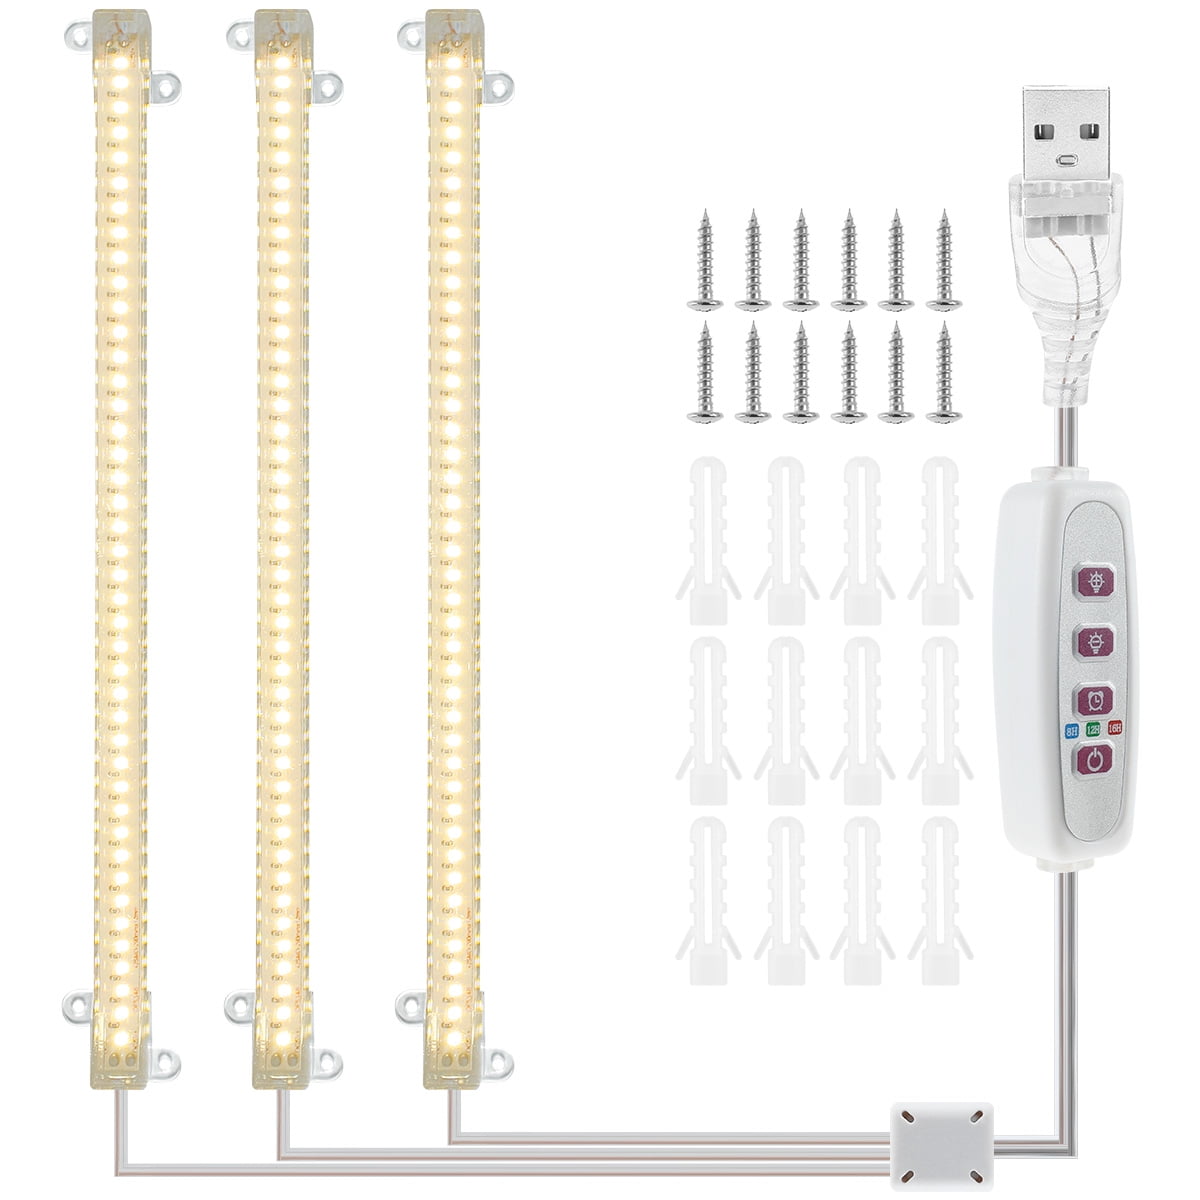 Portable USB Led Grow Light Bar Strip Lamp Bulb For Plant Hydroponic Flower DC5V 